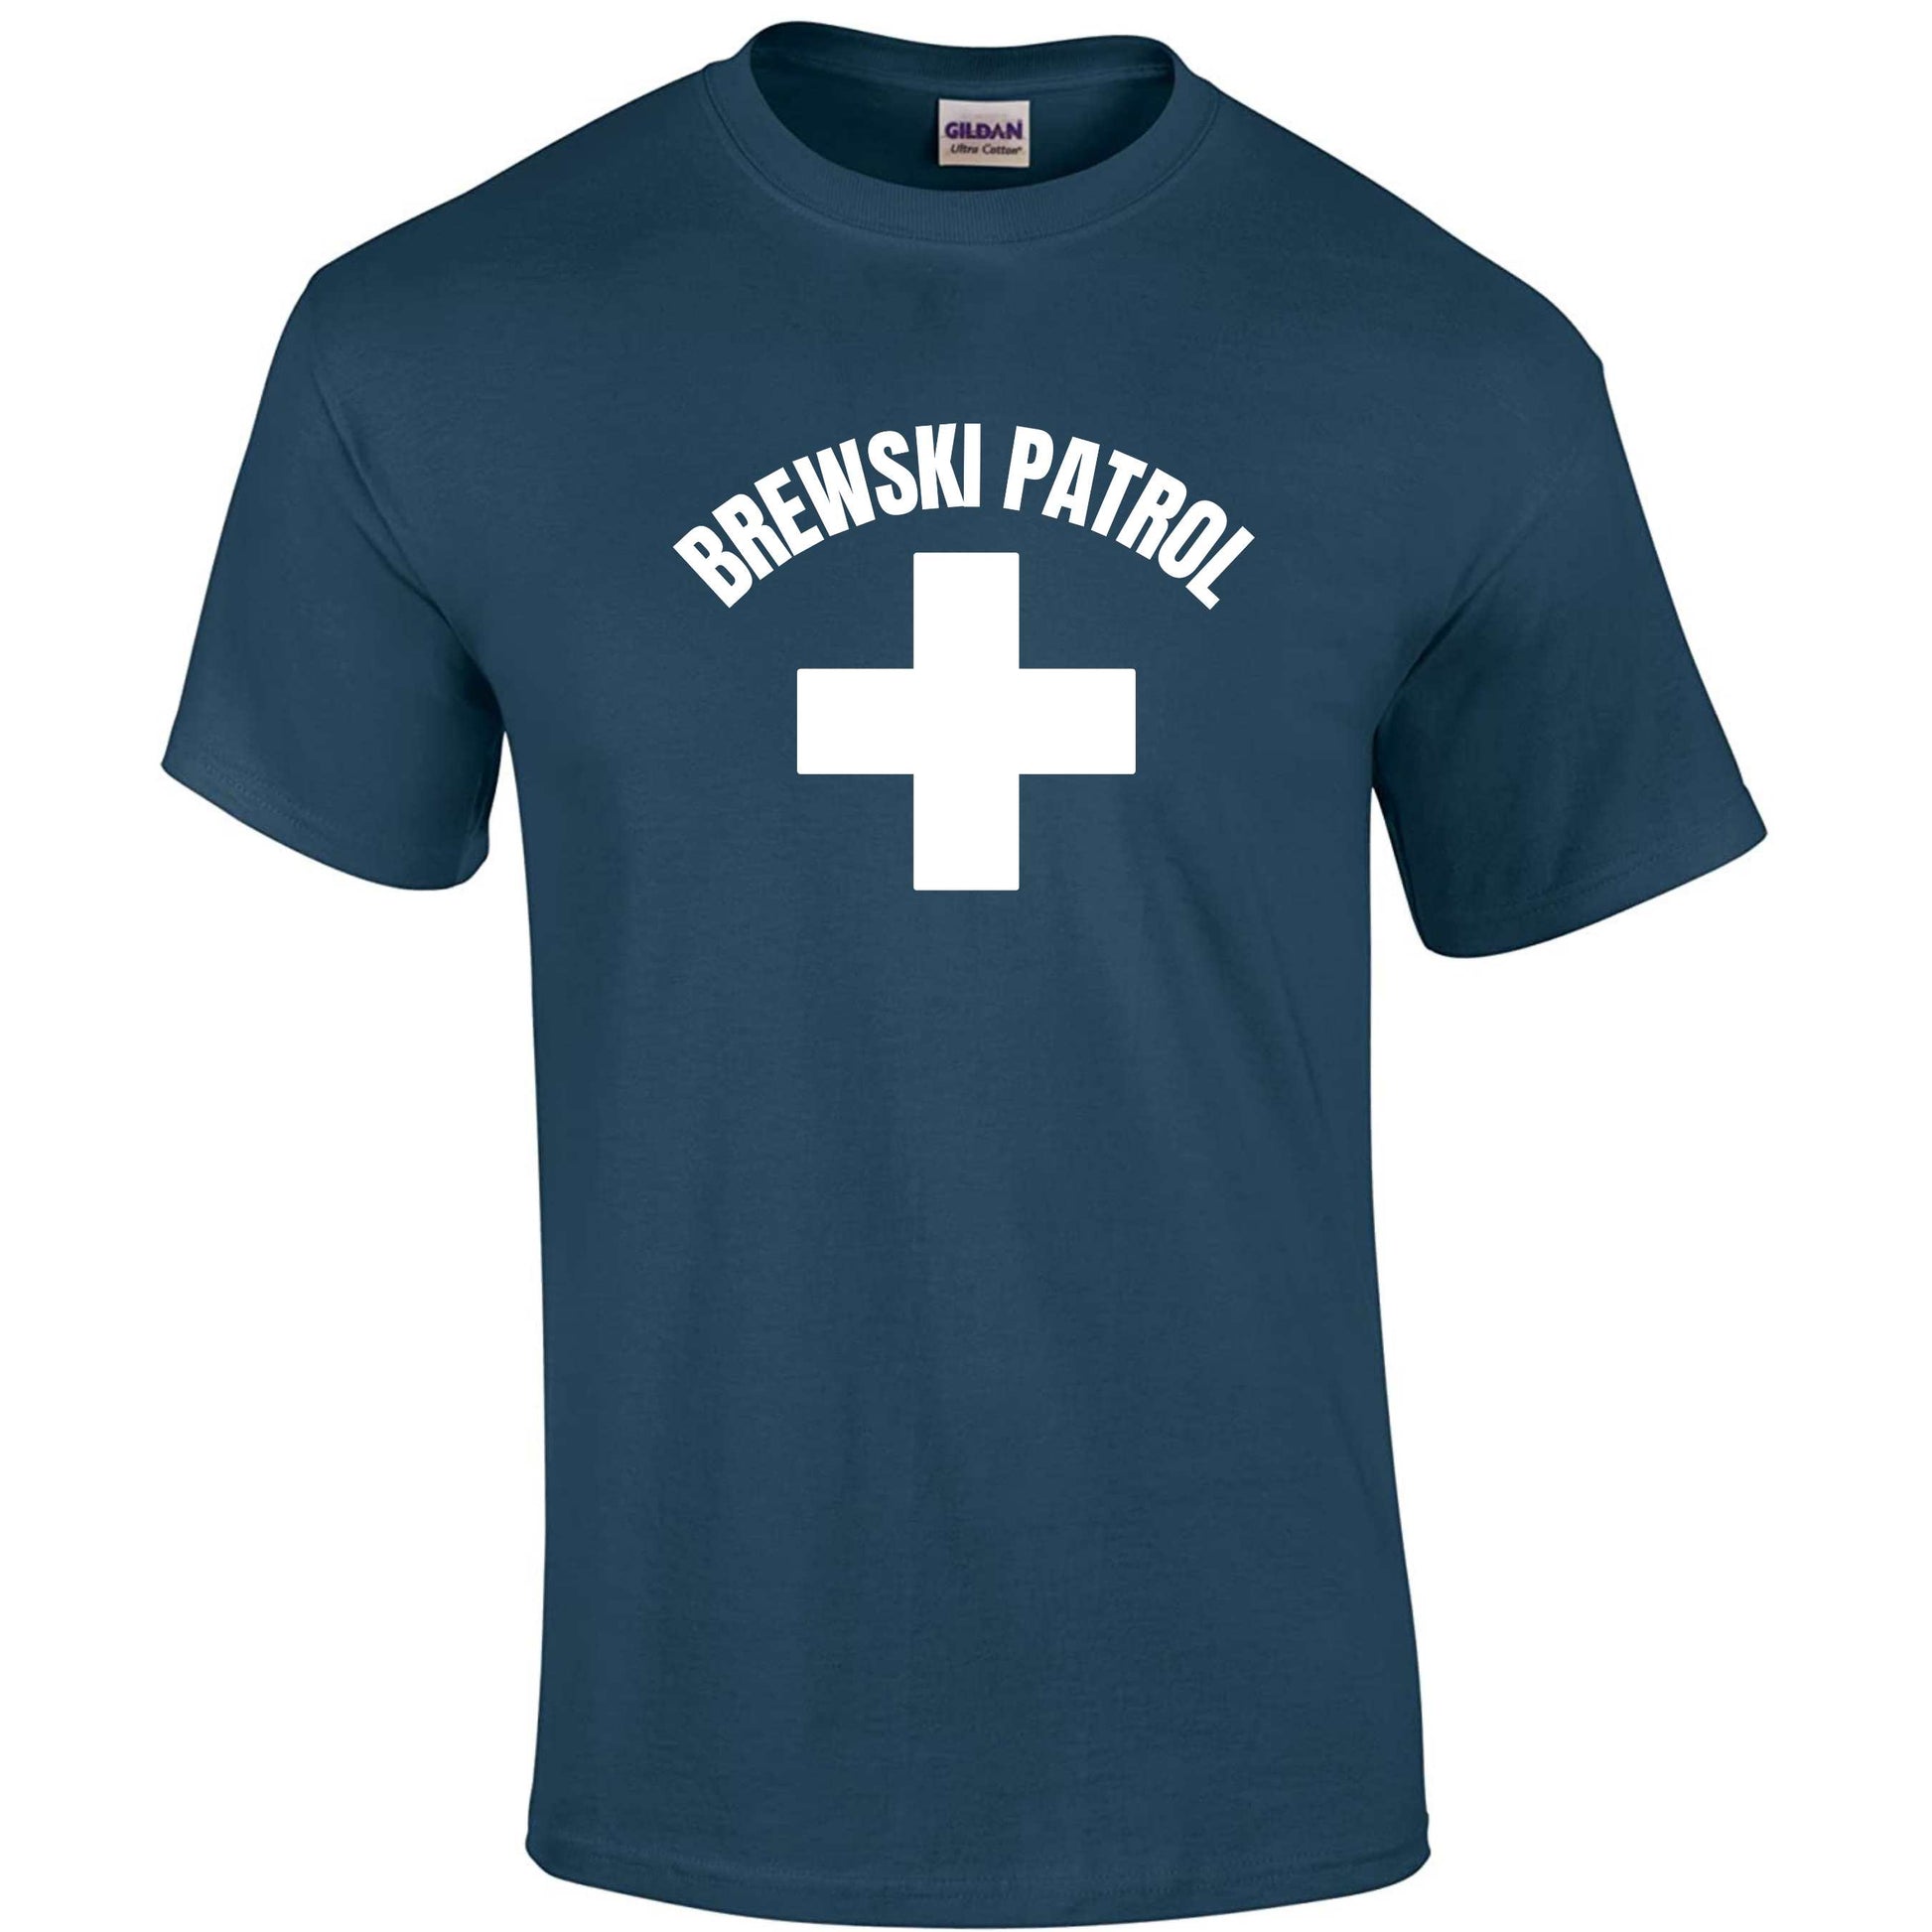 Brewski Patrol - Graphic T-Shirt - Mister Snarky's